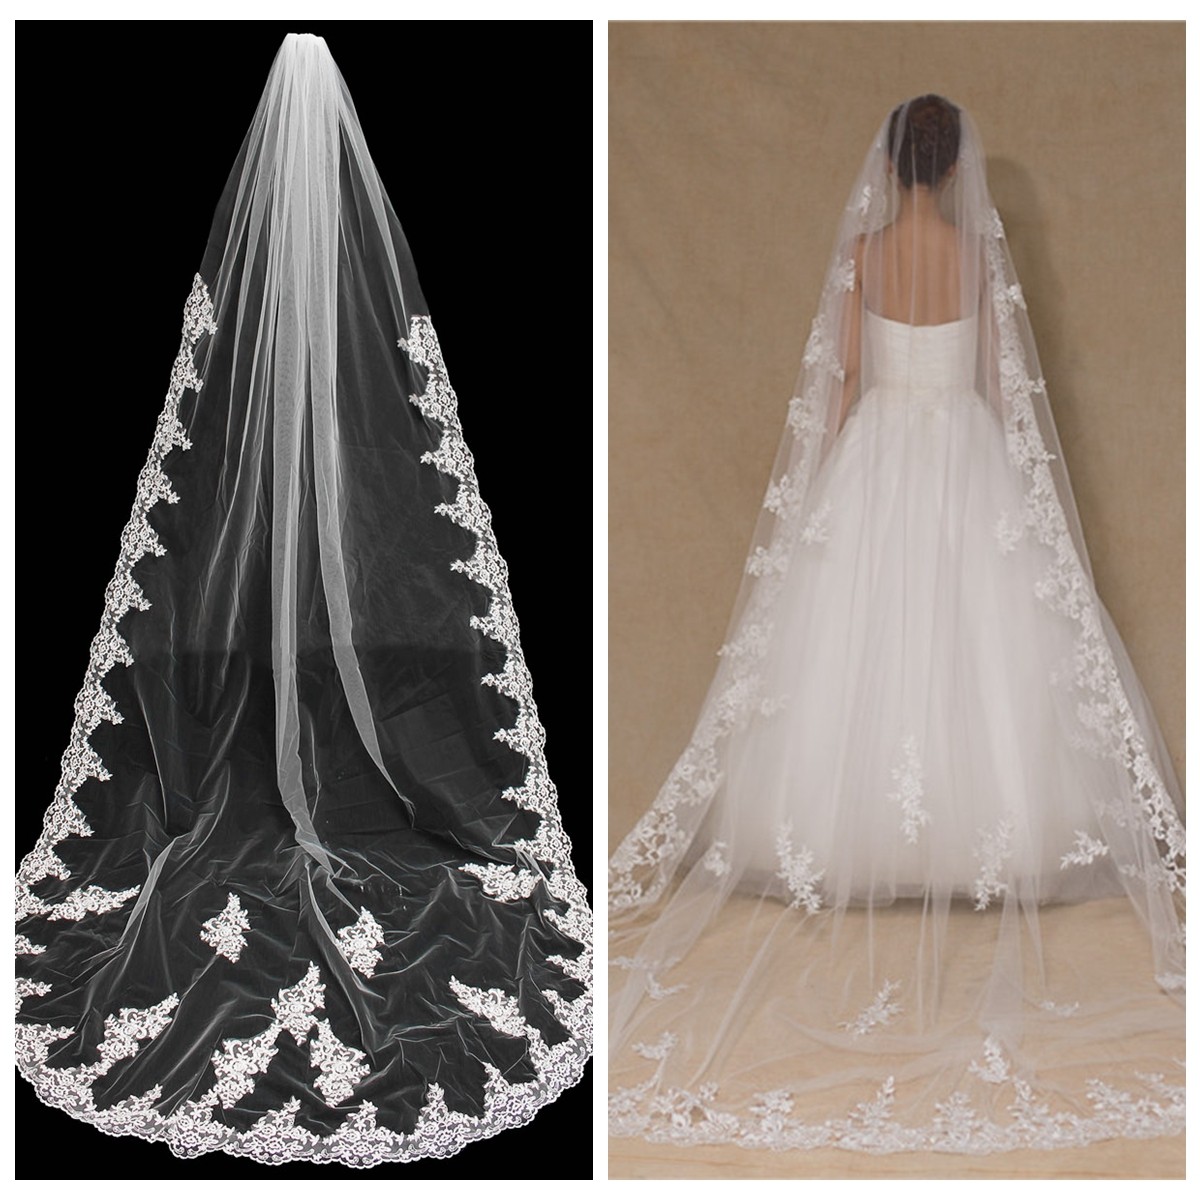 27M-Bride-White-Ivory-Elegant-Cathedral-Length-Wedding-Bridal-Veil-With-Lace-Edge-1025631